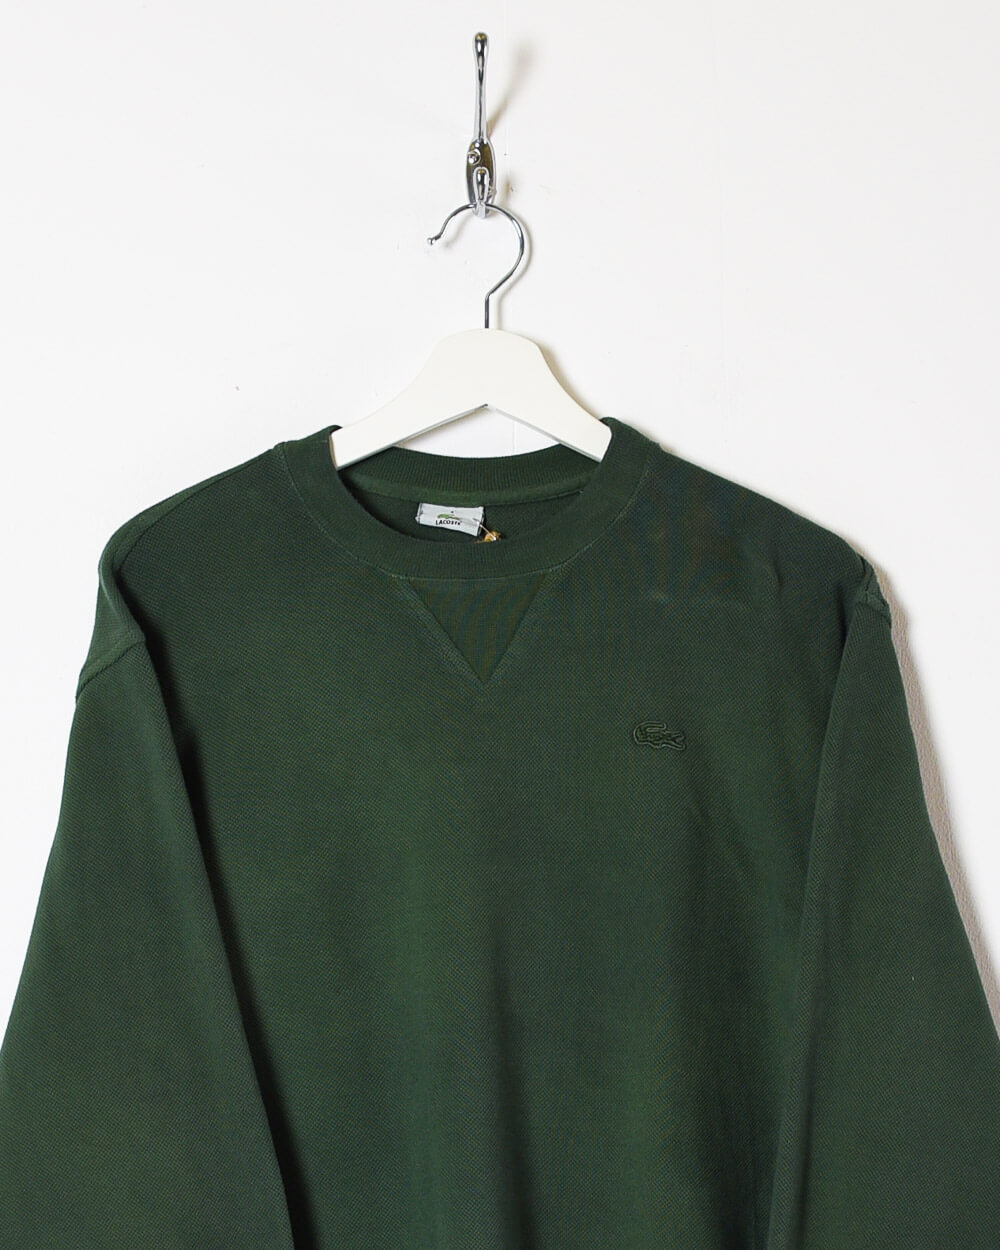 Green Lacoste Overdyed Sweatshirt - Small